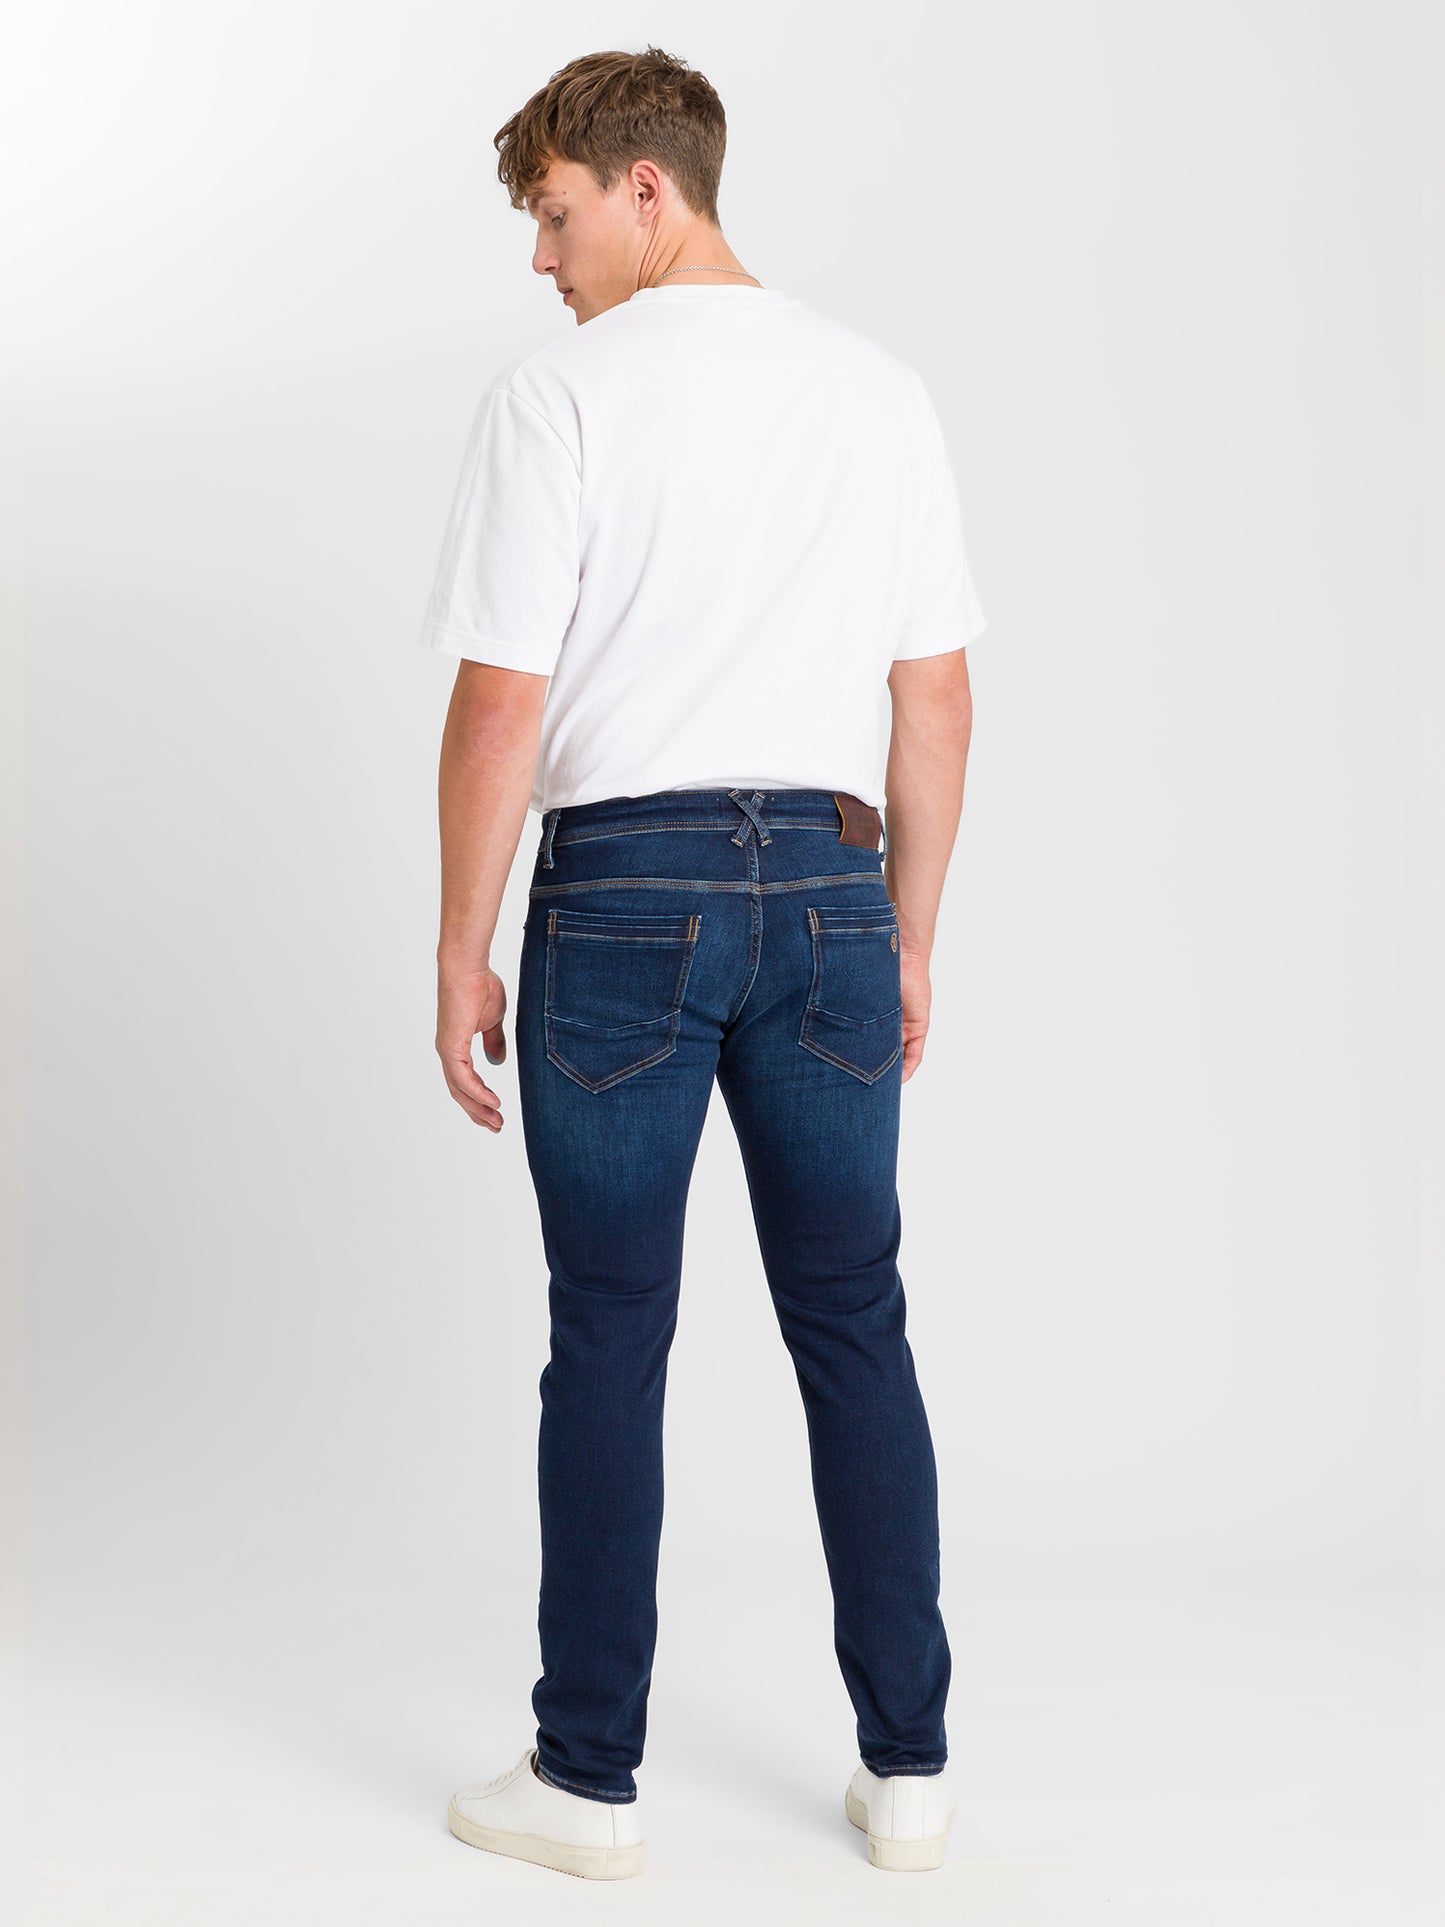 Jimi men's jeans slim fit regular waist tapered leg dark blue